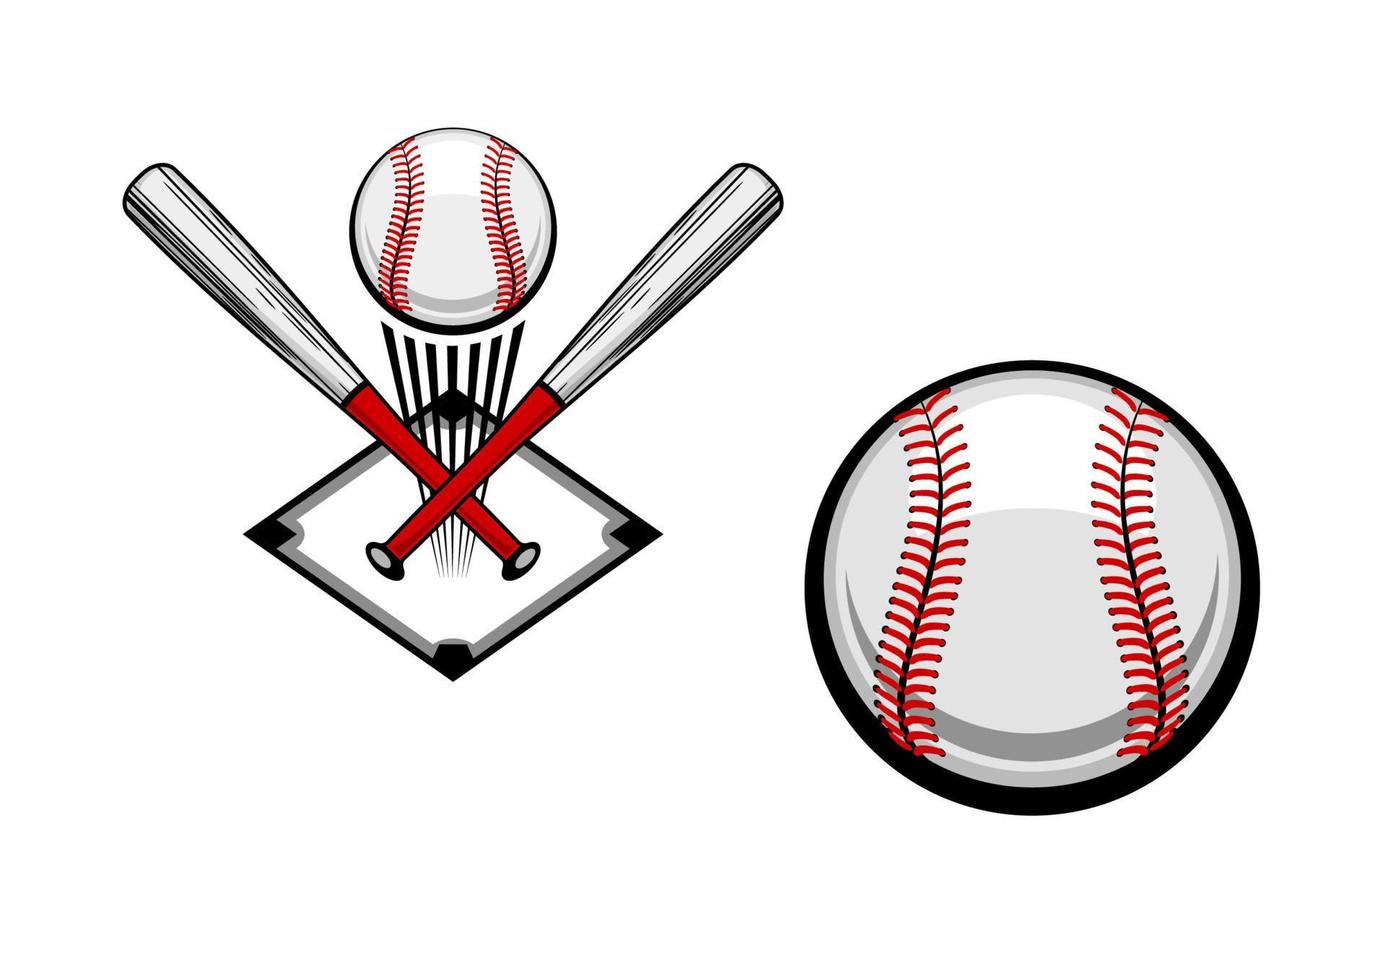 Baseball-Baze, Ball und Fledermaus-Emblem vektor